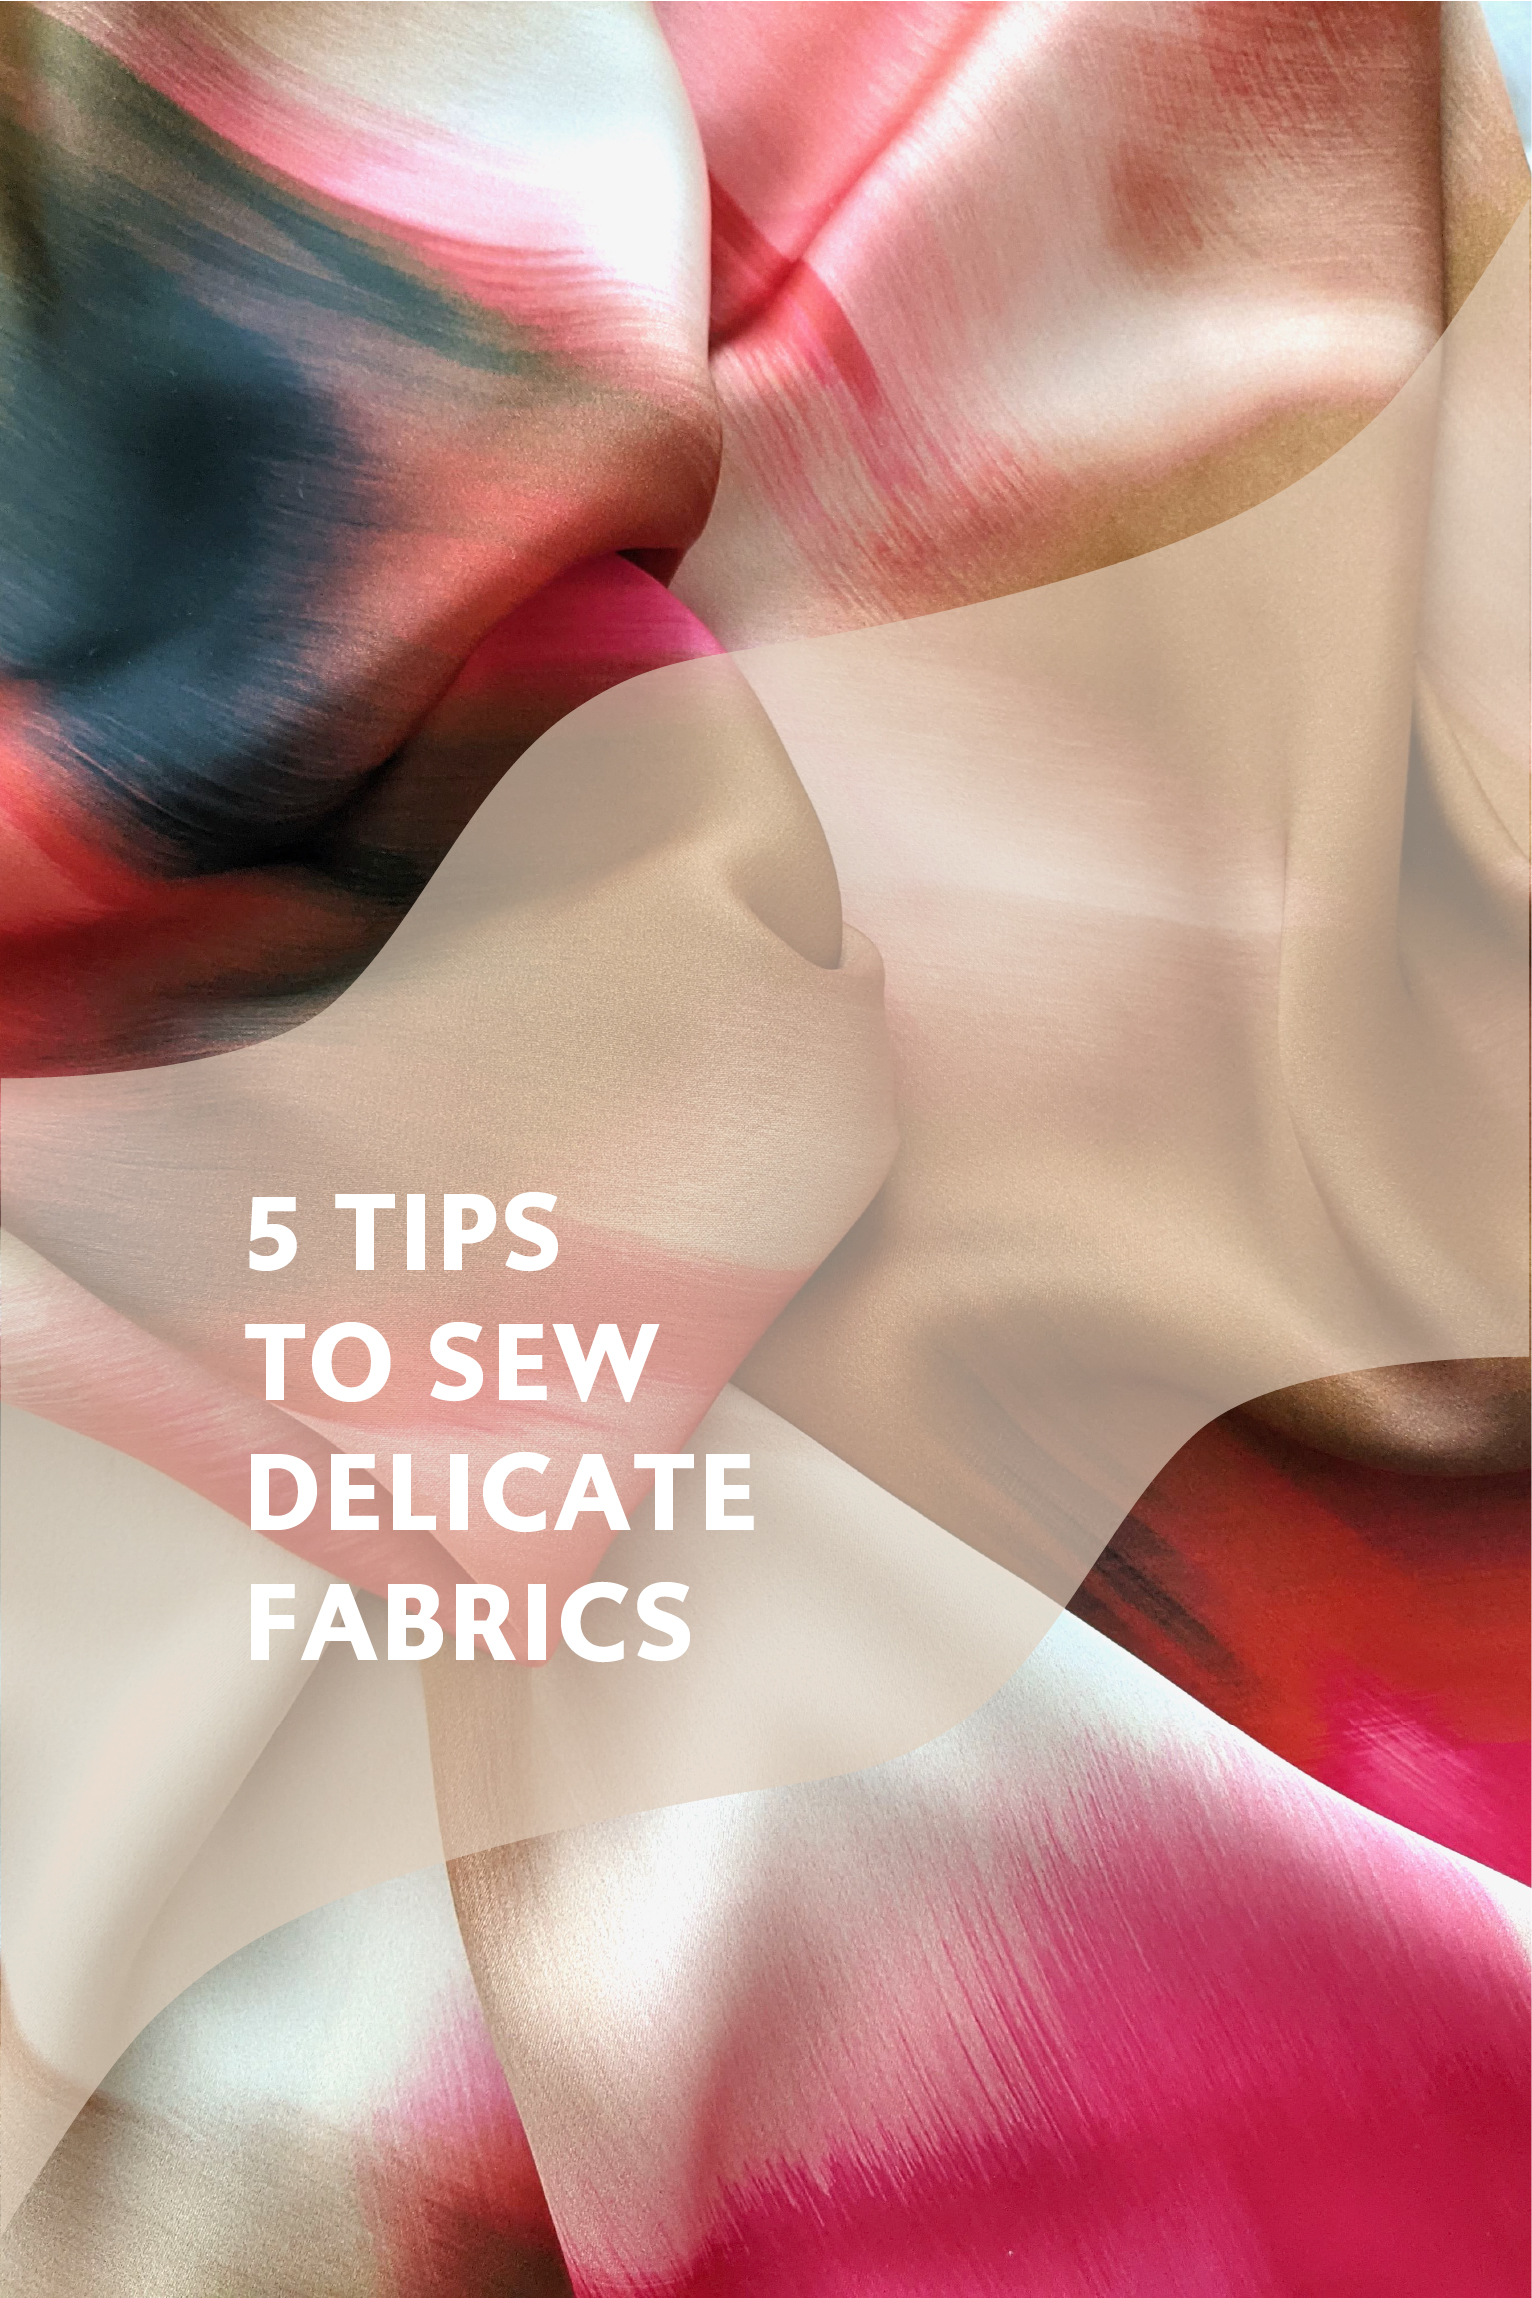 5 tips to sew delicate fabrics